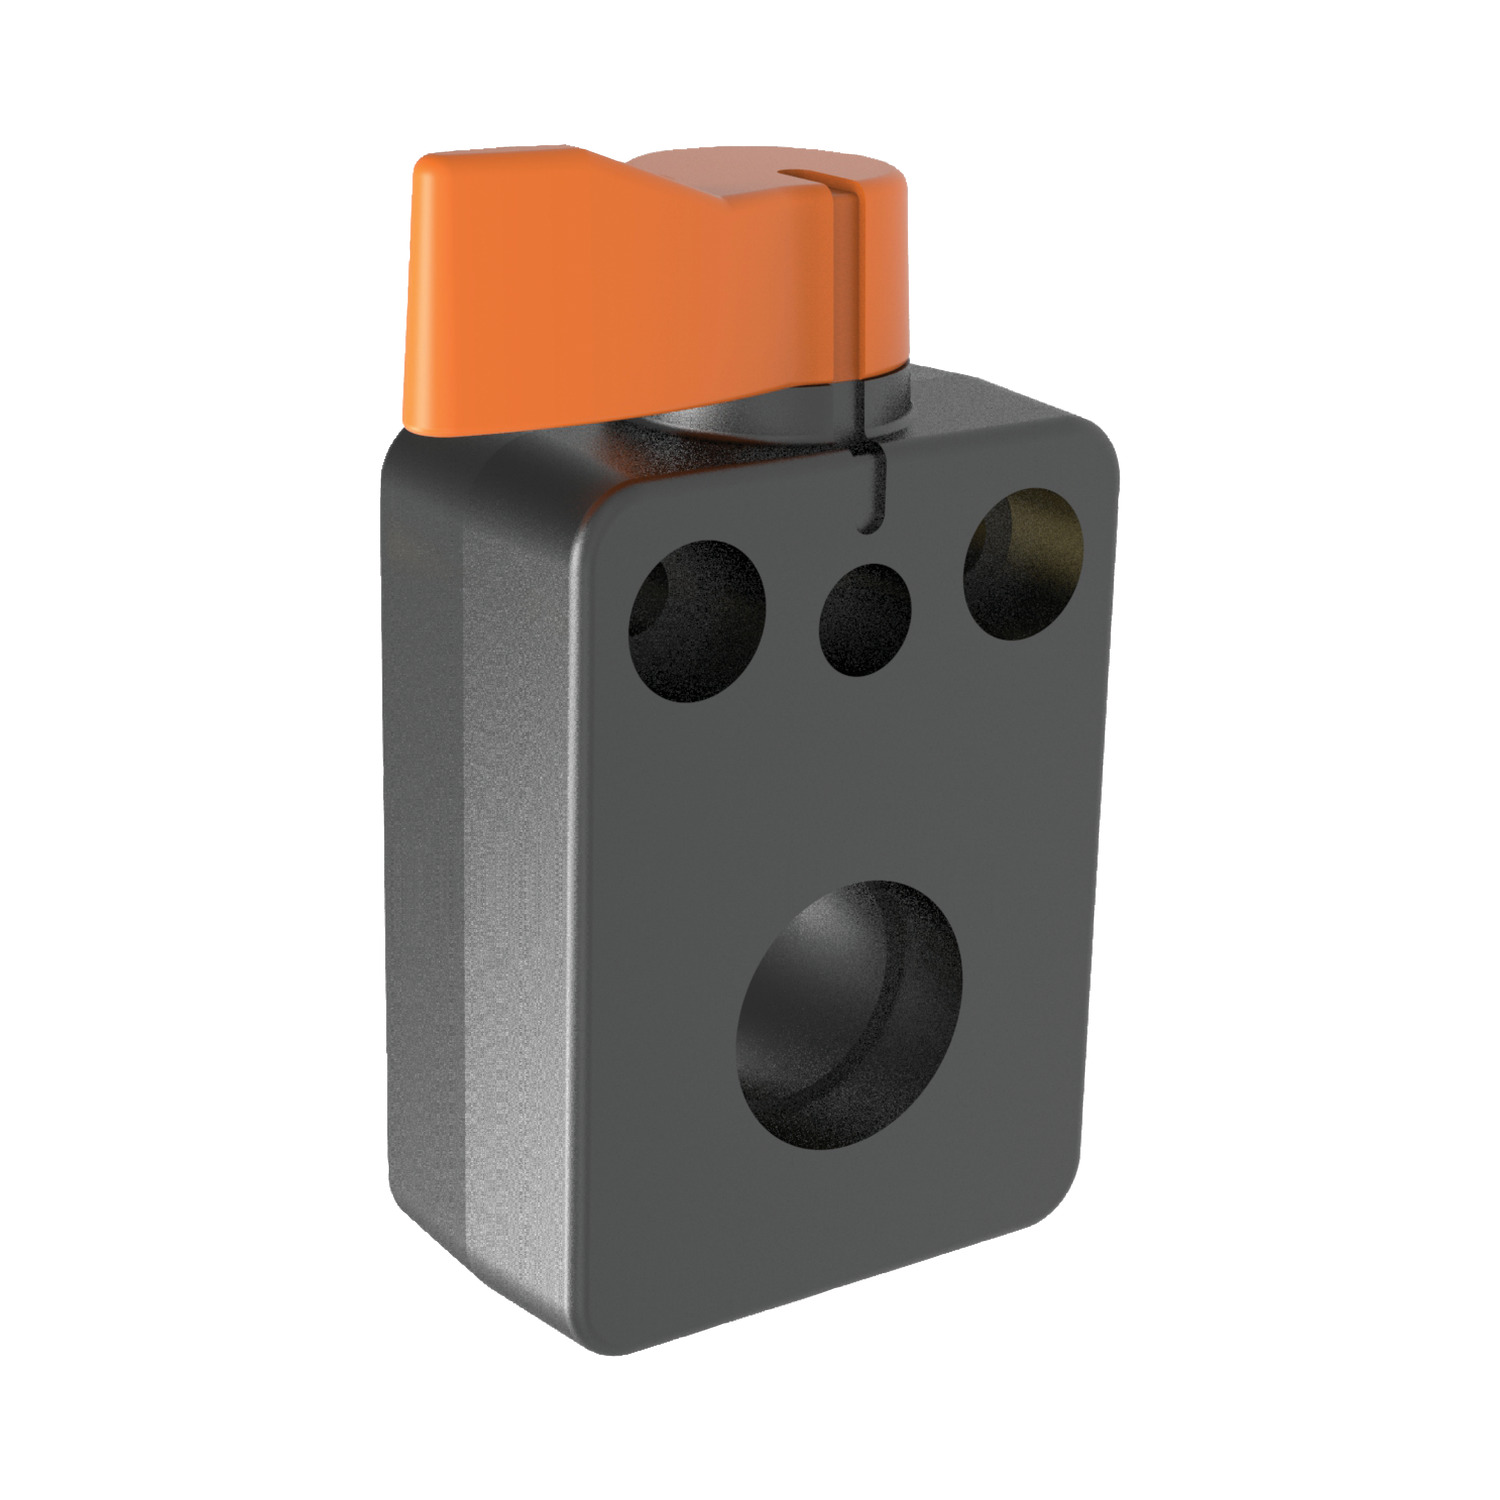 33980.W1512 One Touch Spindle Lock, Orange Handle orange handle - 12 dia - M5 EC:20192112 WG:05063055506991